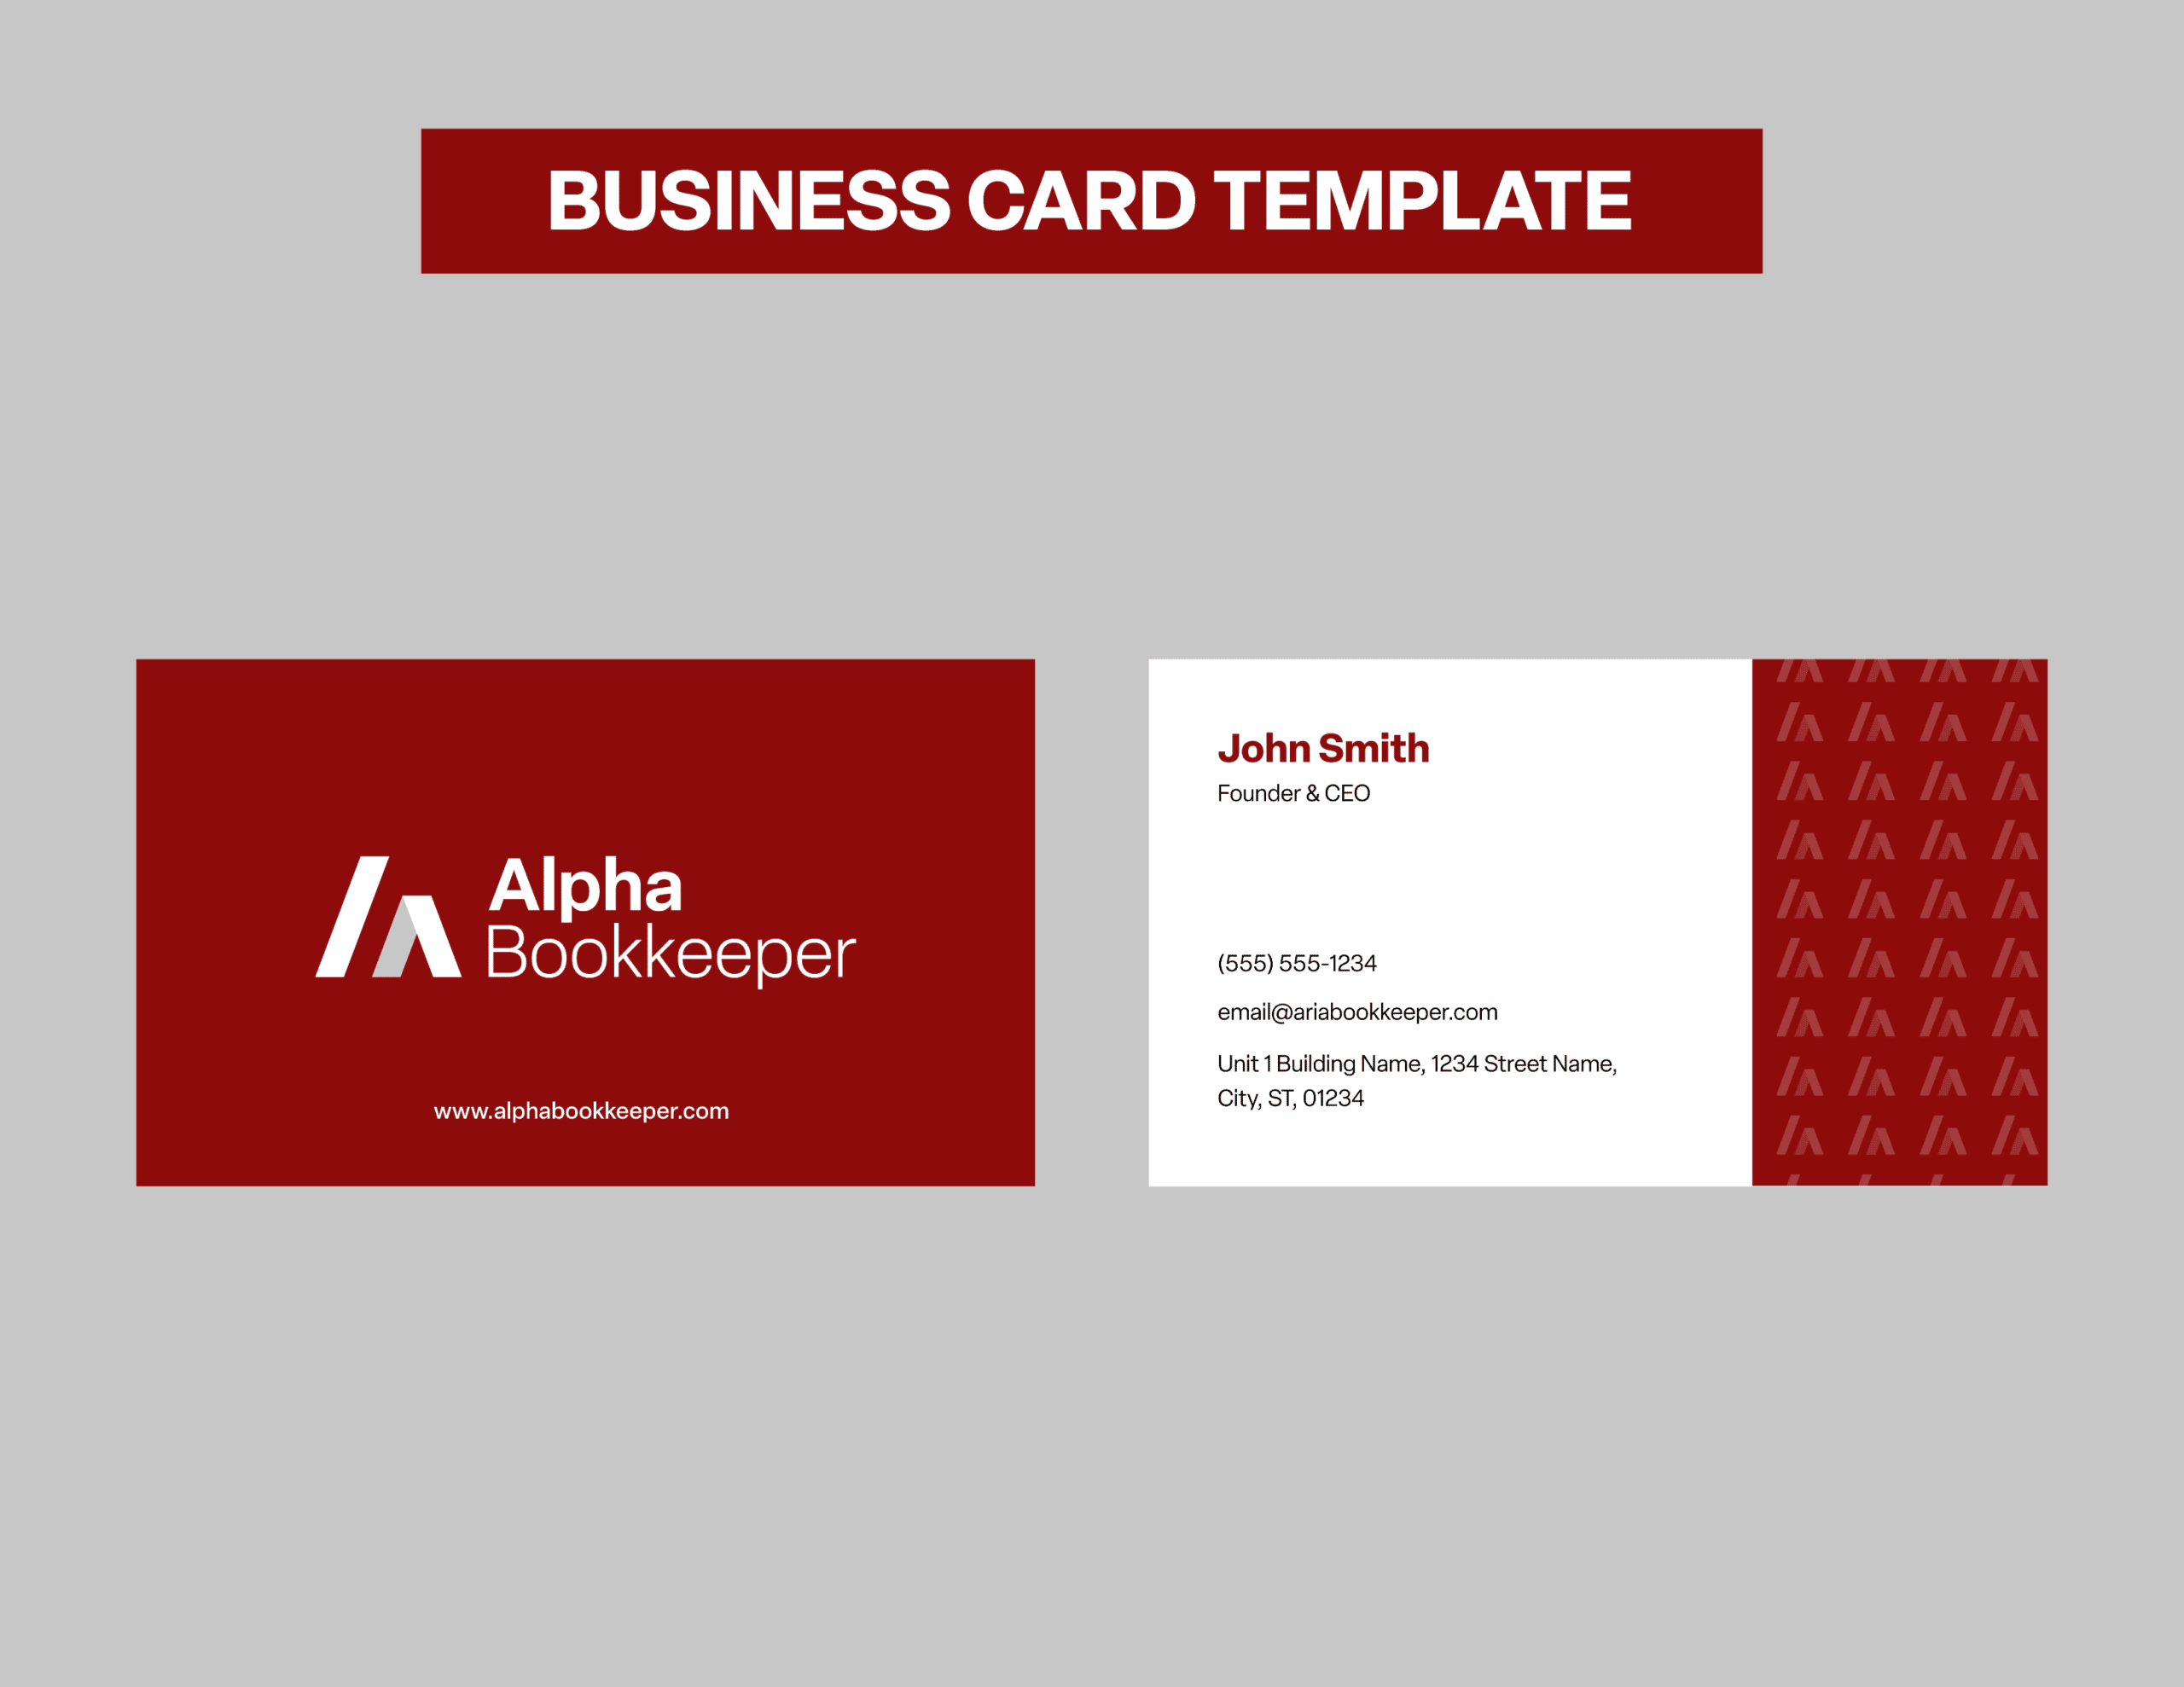 04Alpha_Showcase_Business Card Template